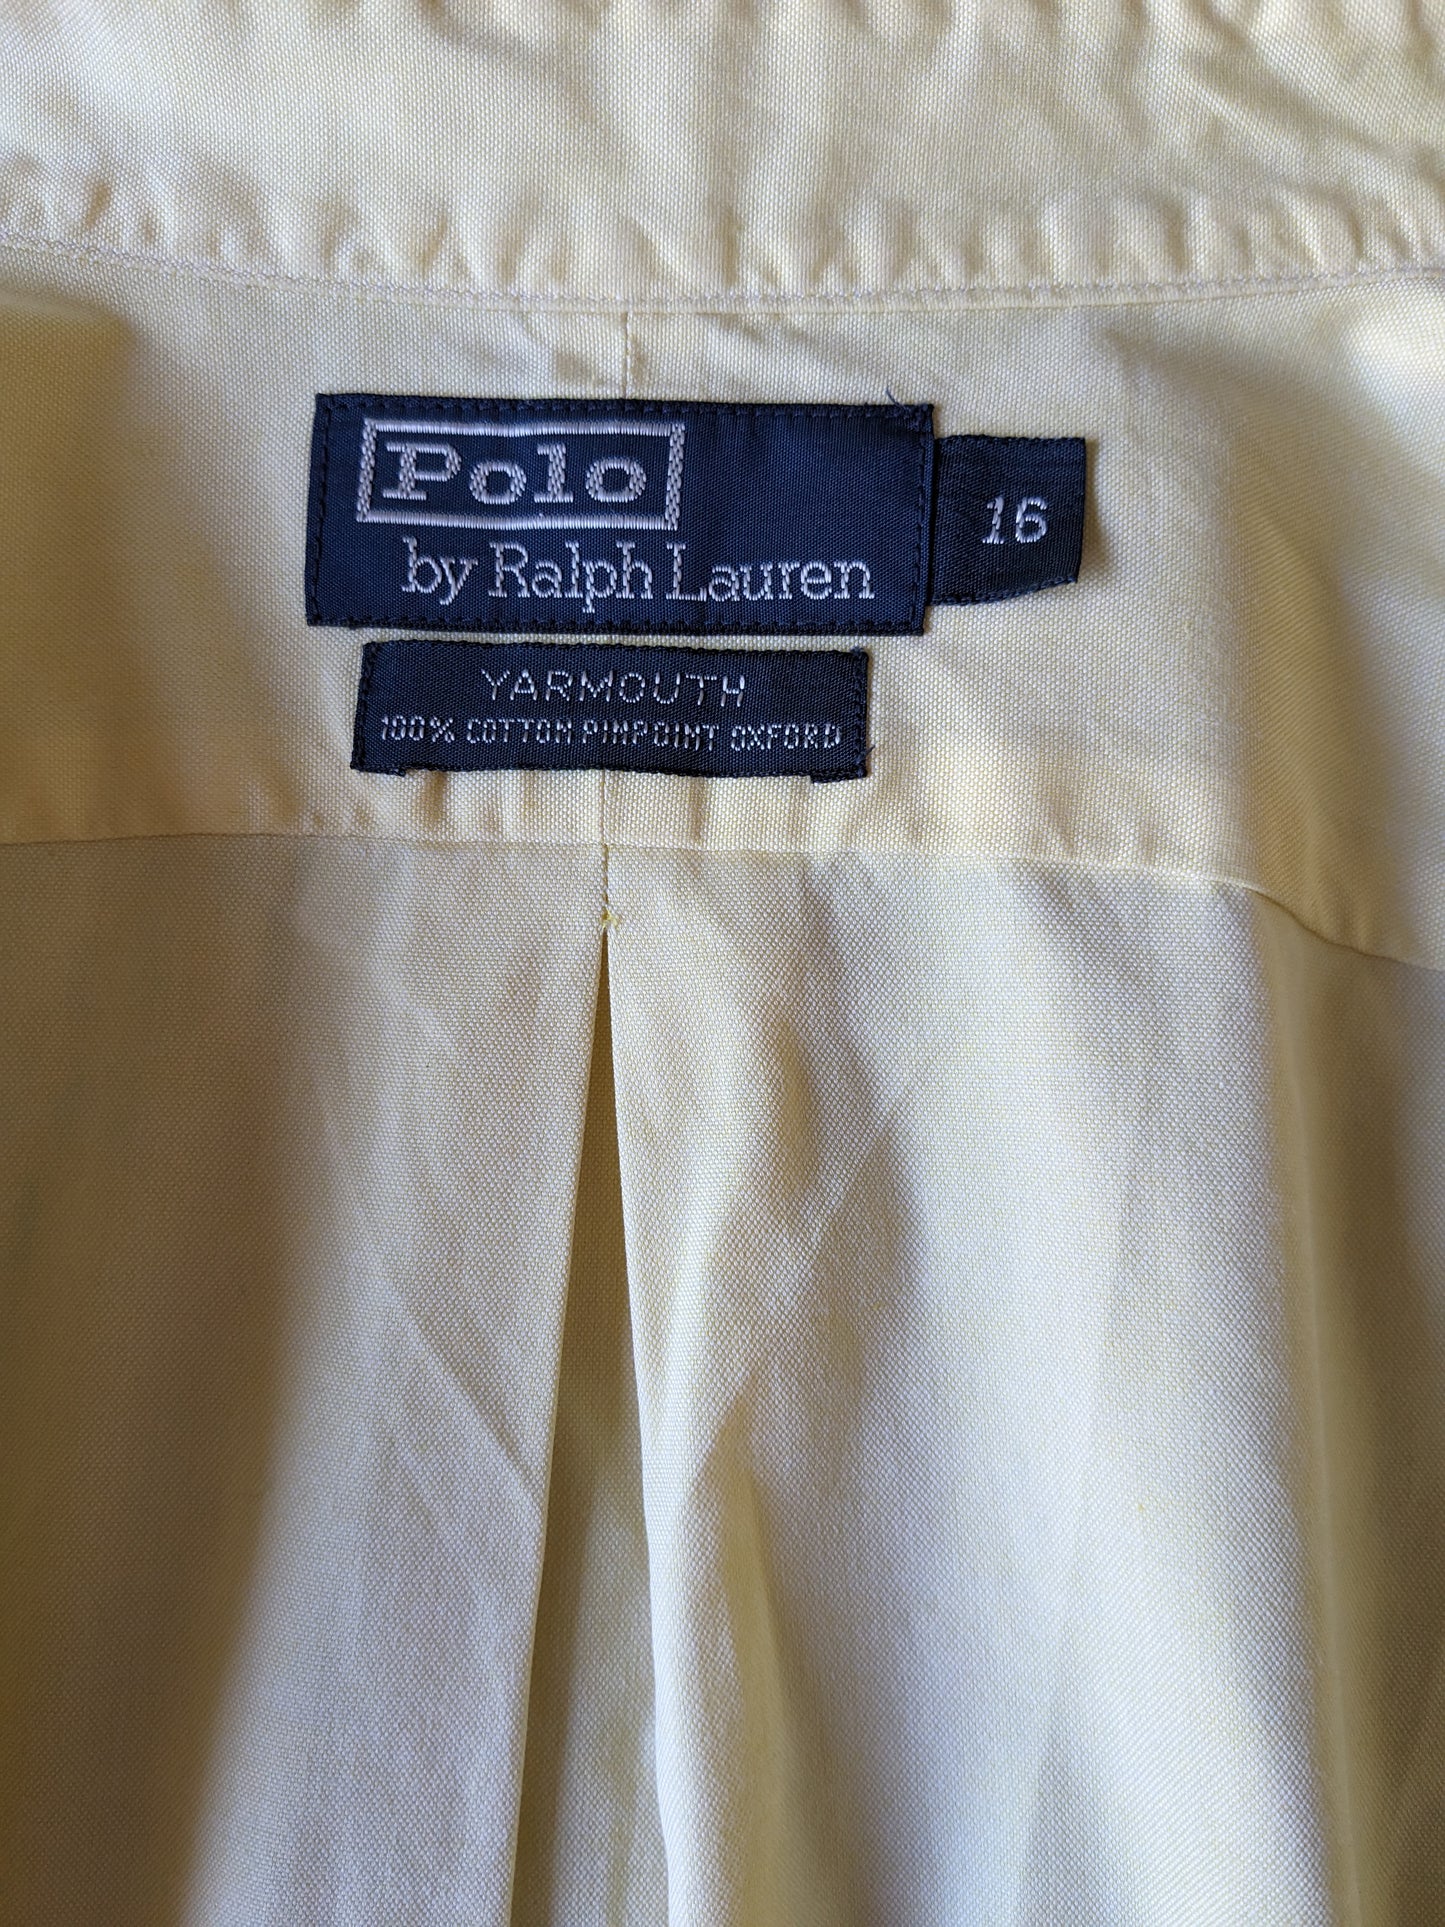 Polo by Ralph Lauren shirt. Yellow. Yarmouth type. Size 2XL / XXL.